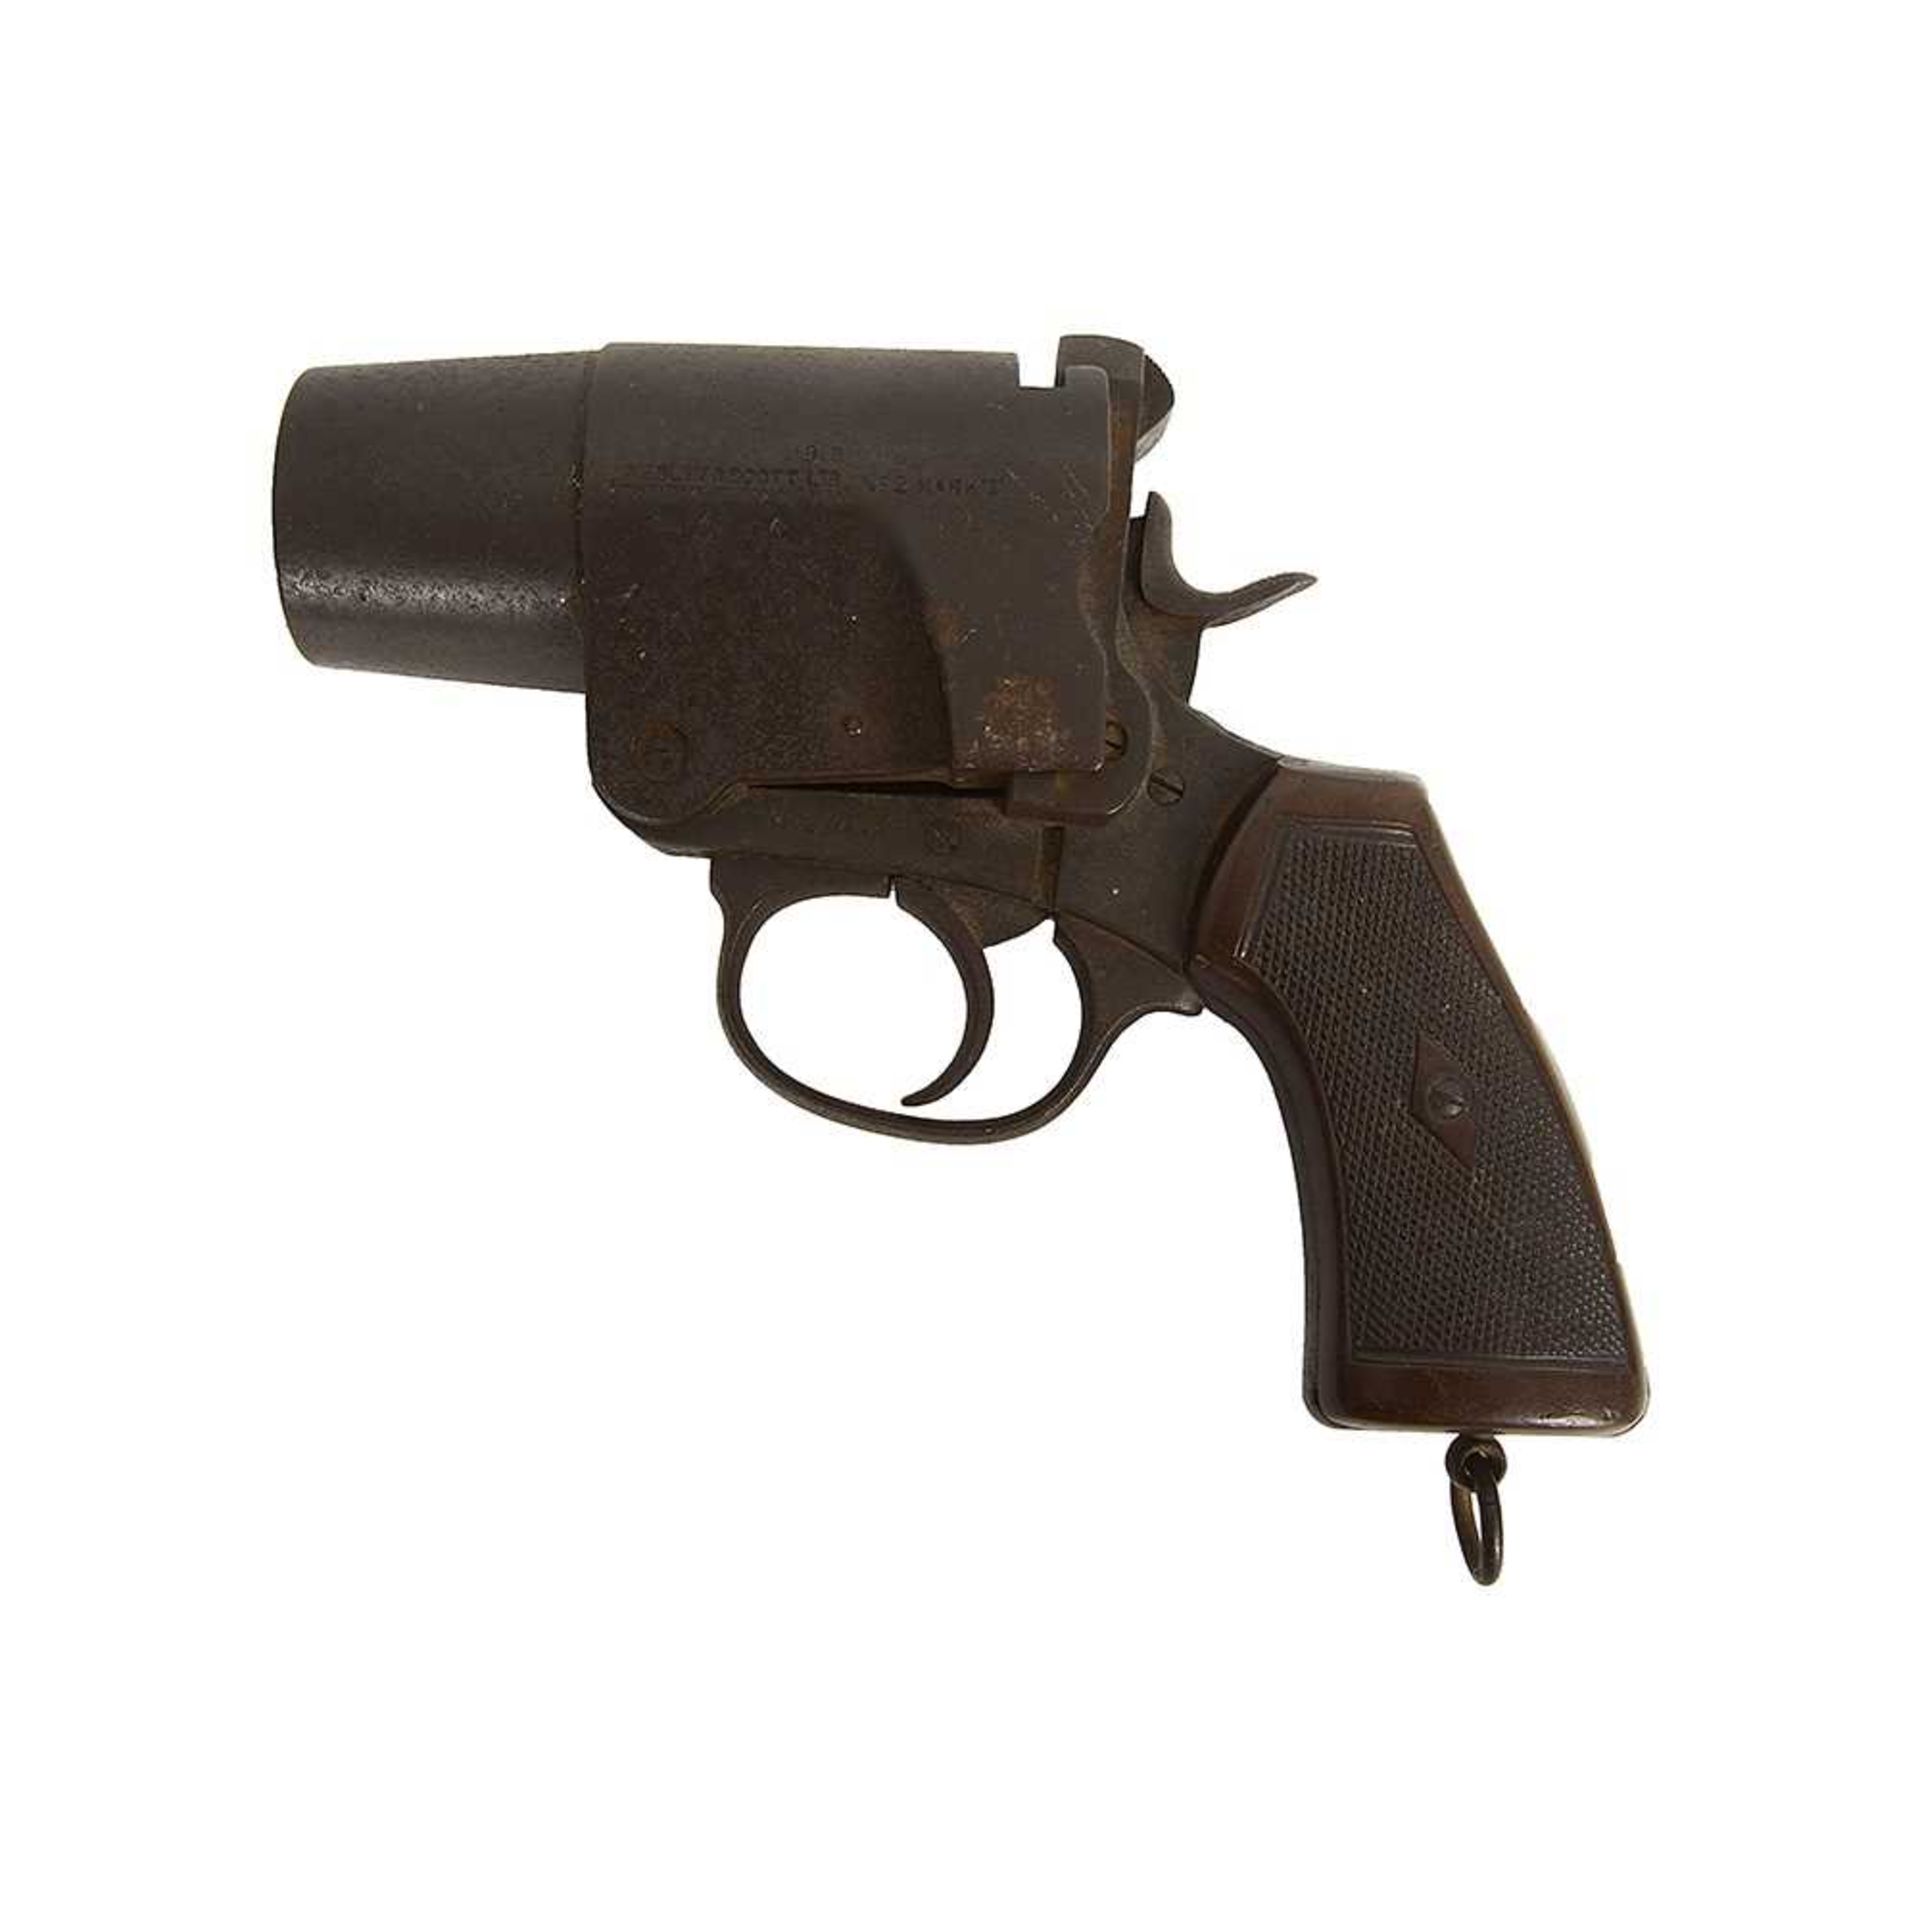 A WWI WEBLEY & SCOTT MK 1 SIGNAL PISTOL OR FLARE GUN DATED 1918